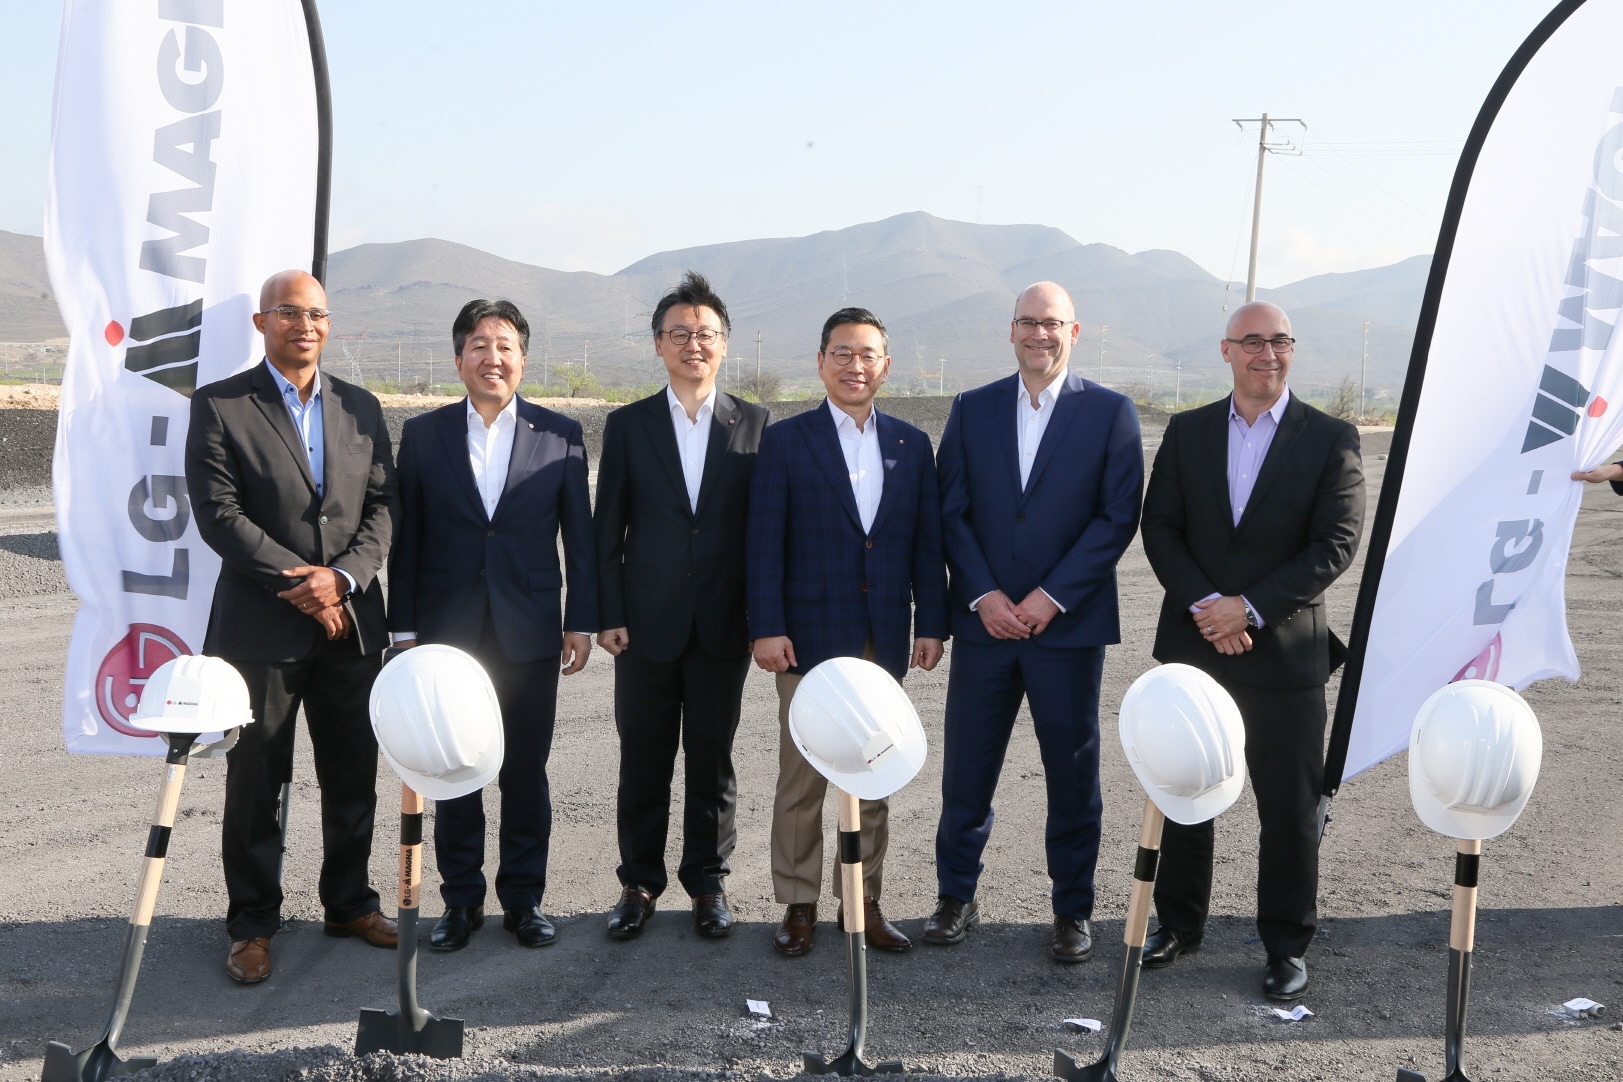 LG Magna E-Powertrain Celebrates Groundbreaking of New Facility in Mexico